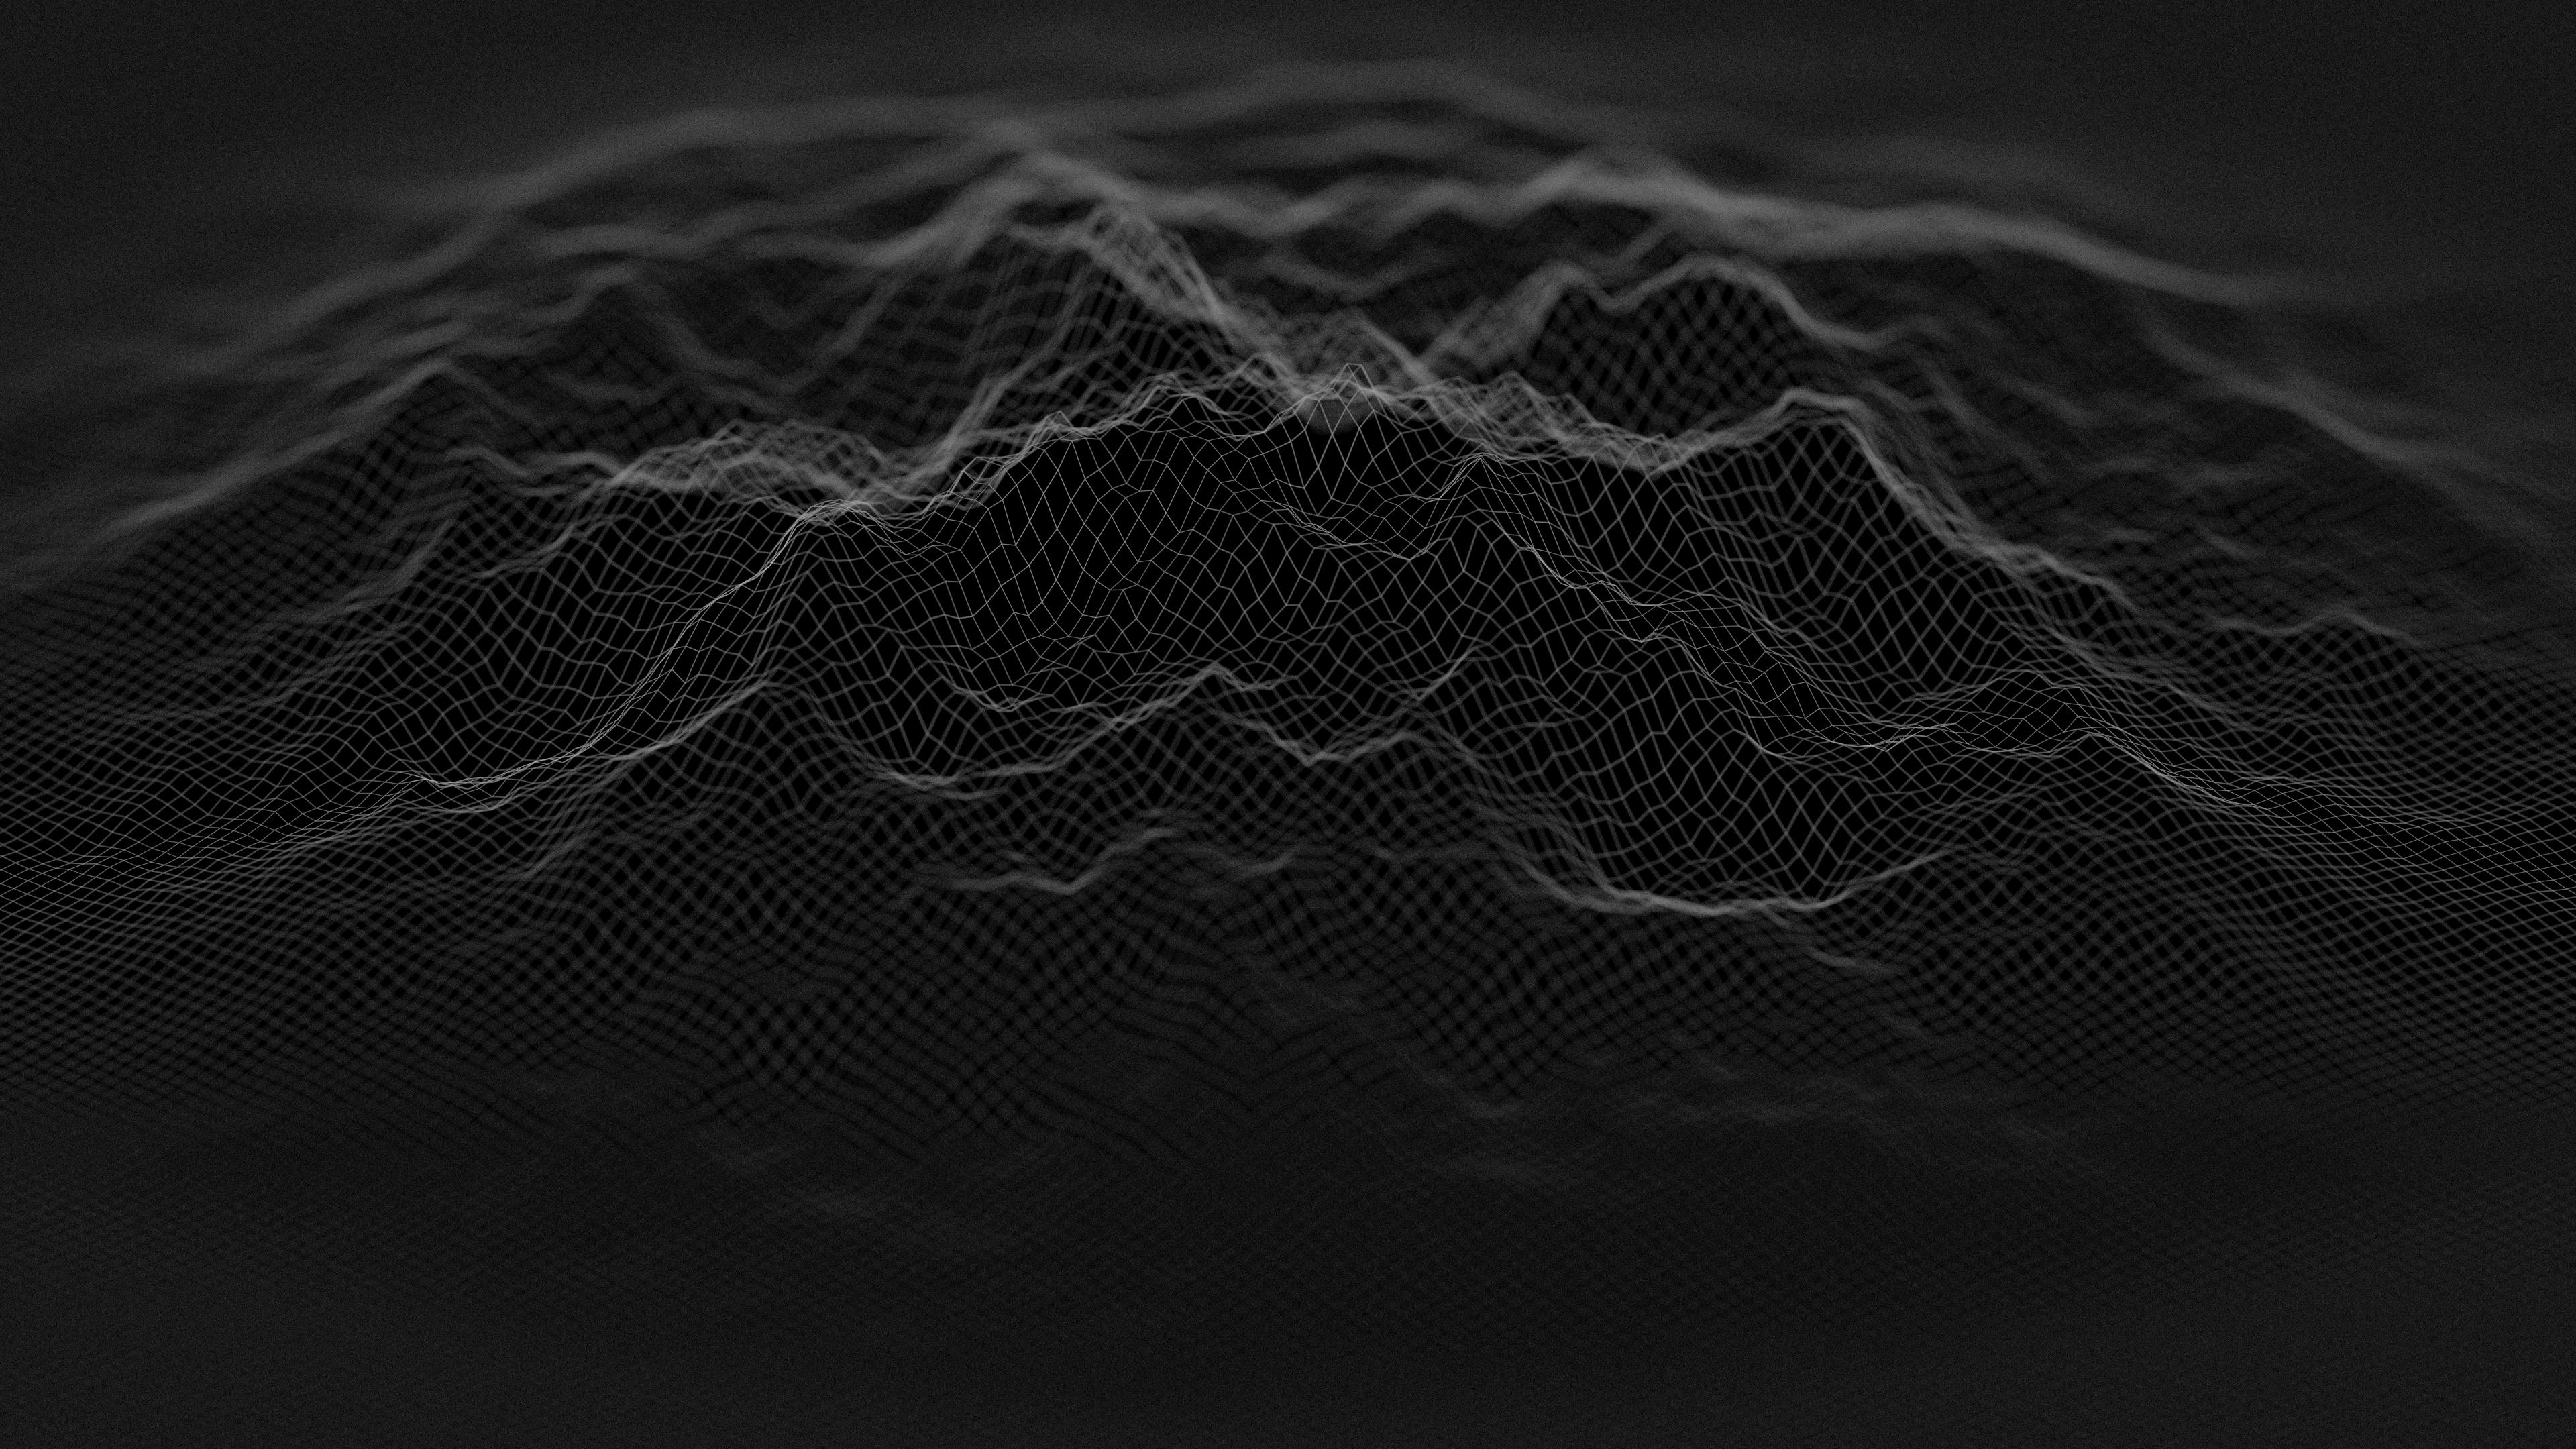 dark abstract minimalist phone wallpaper